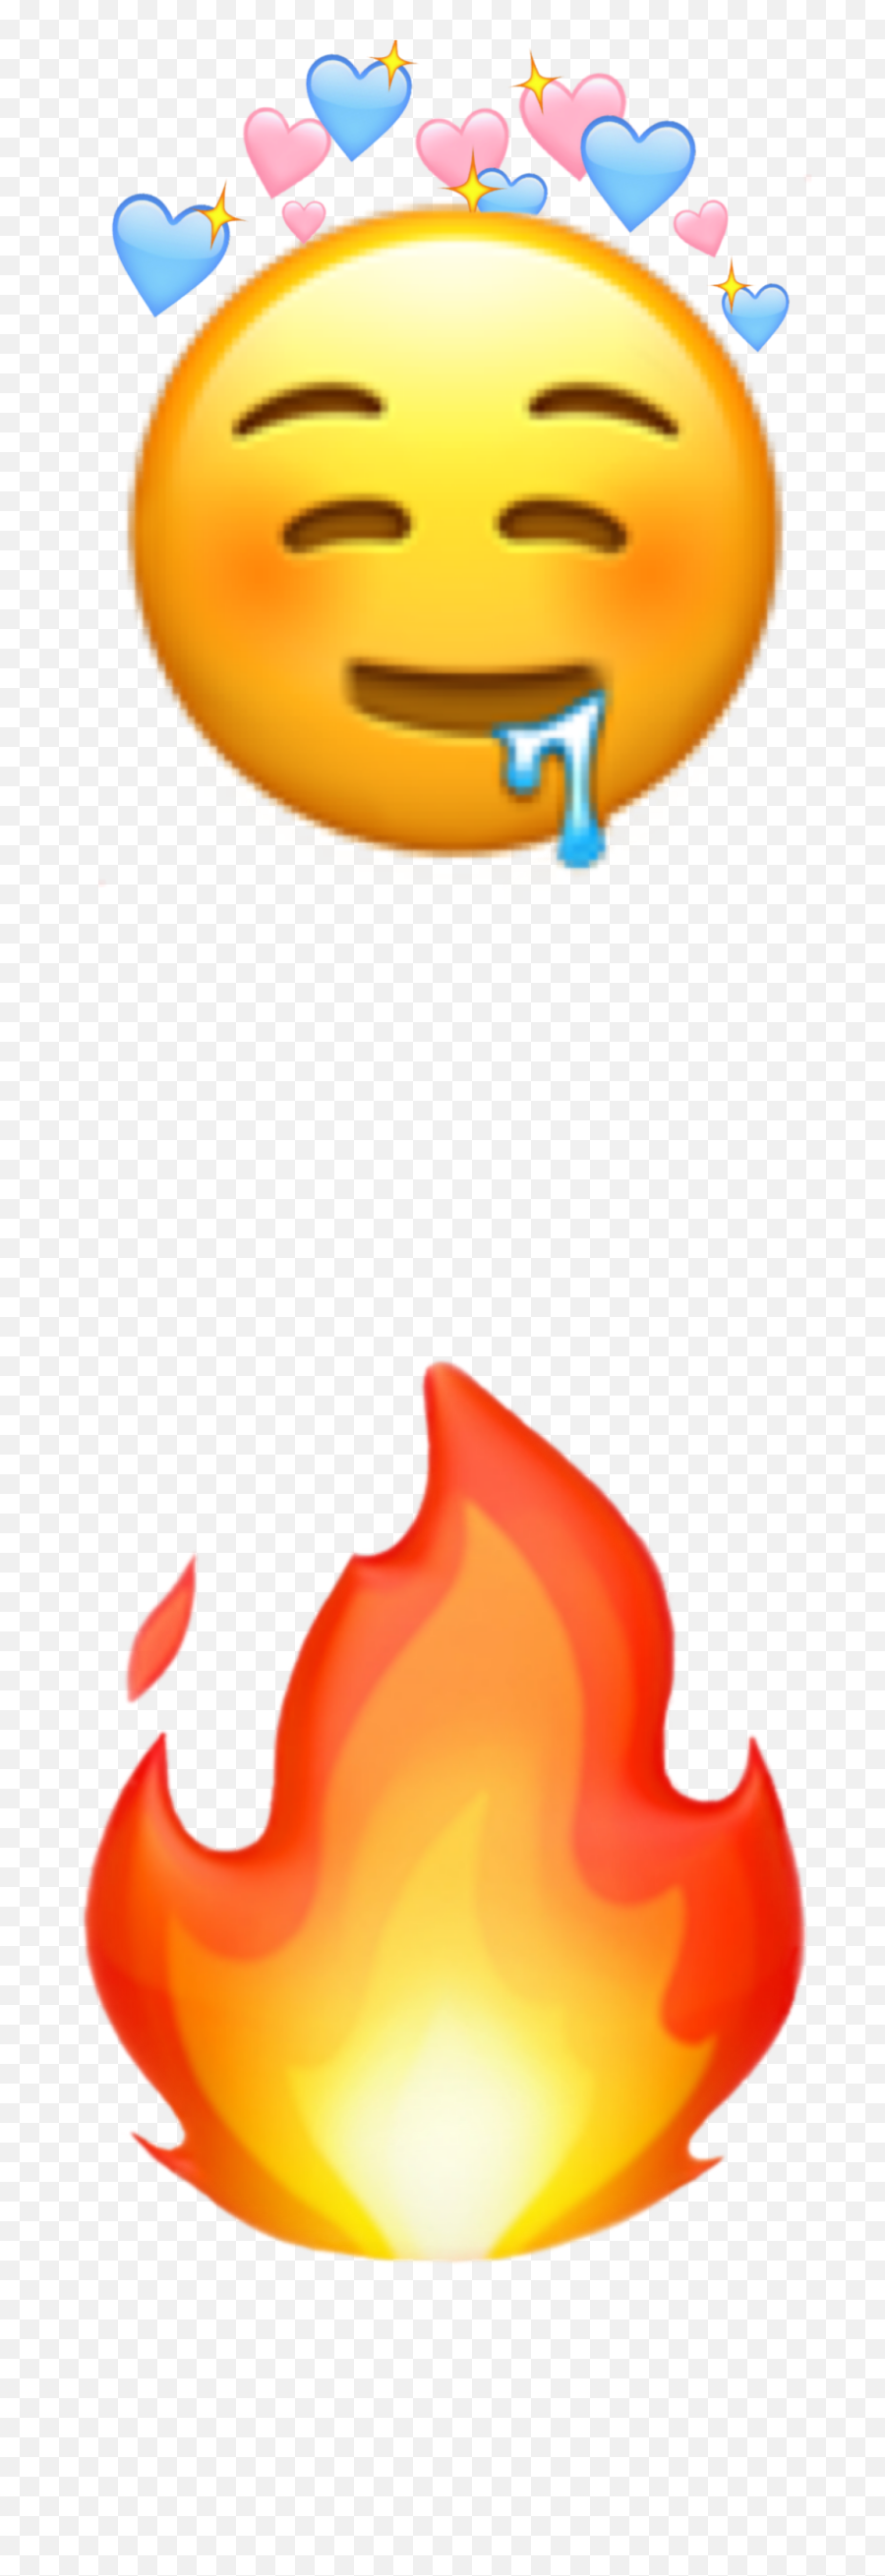 The Most Edited Ffgg Picsart - Emoji Transparent Purple Fire Png,Head On Fire Emoticon